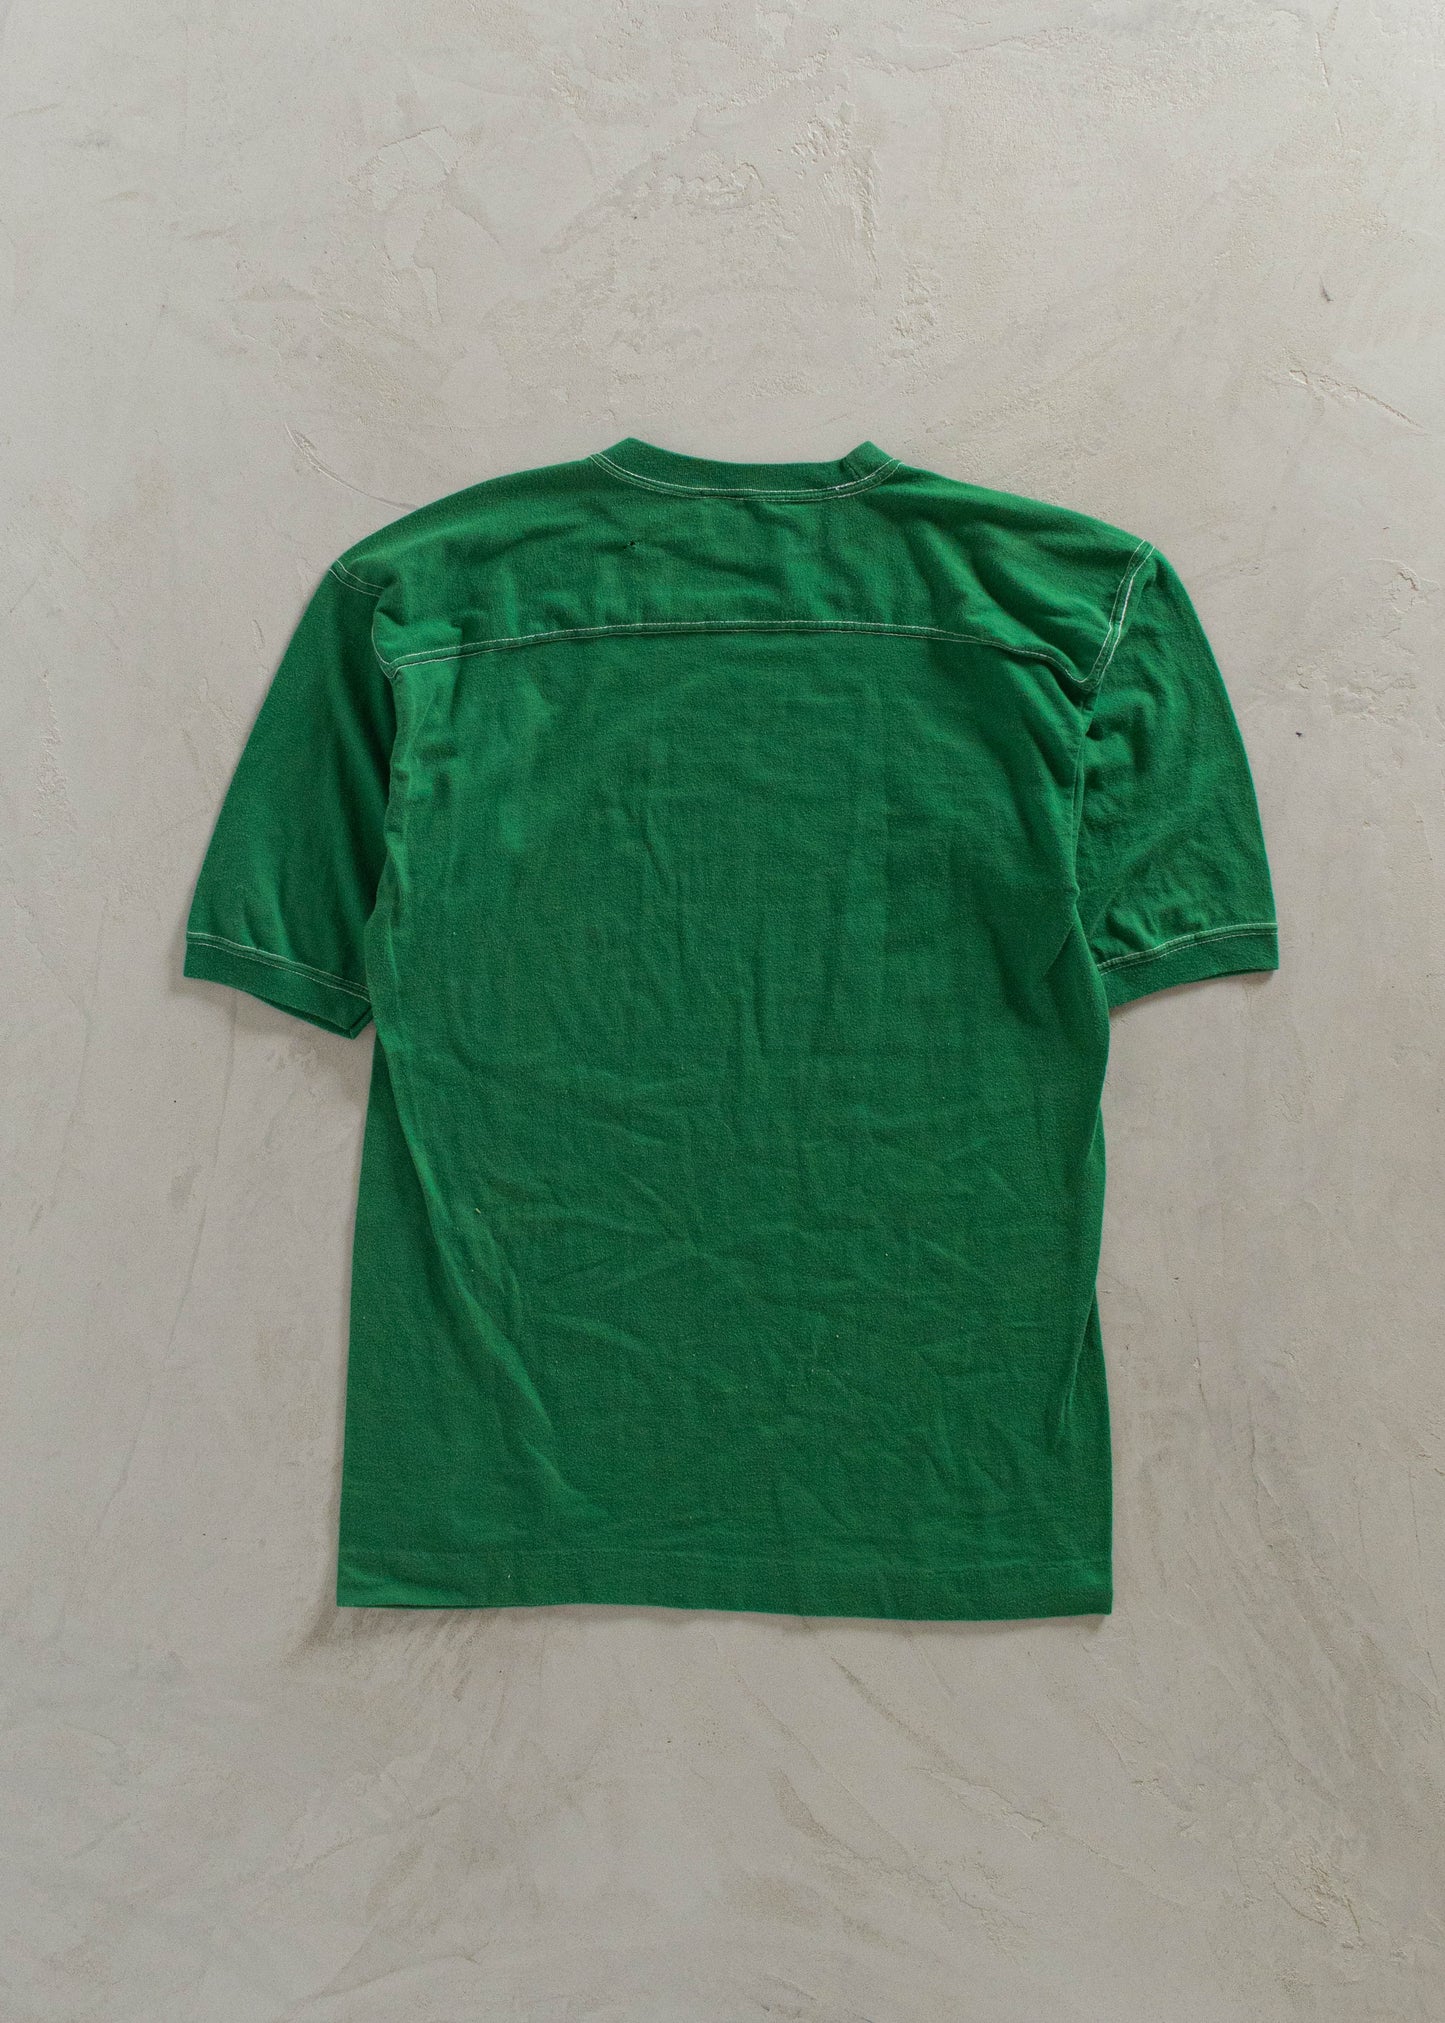 1980s Contrast Stitch Sport T-Shirt Size M/L